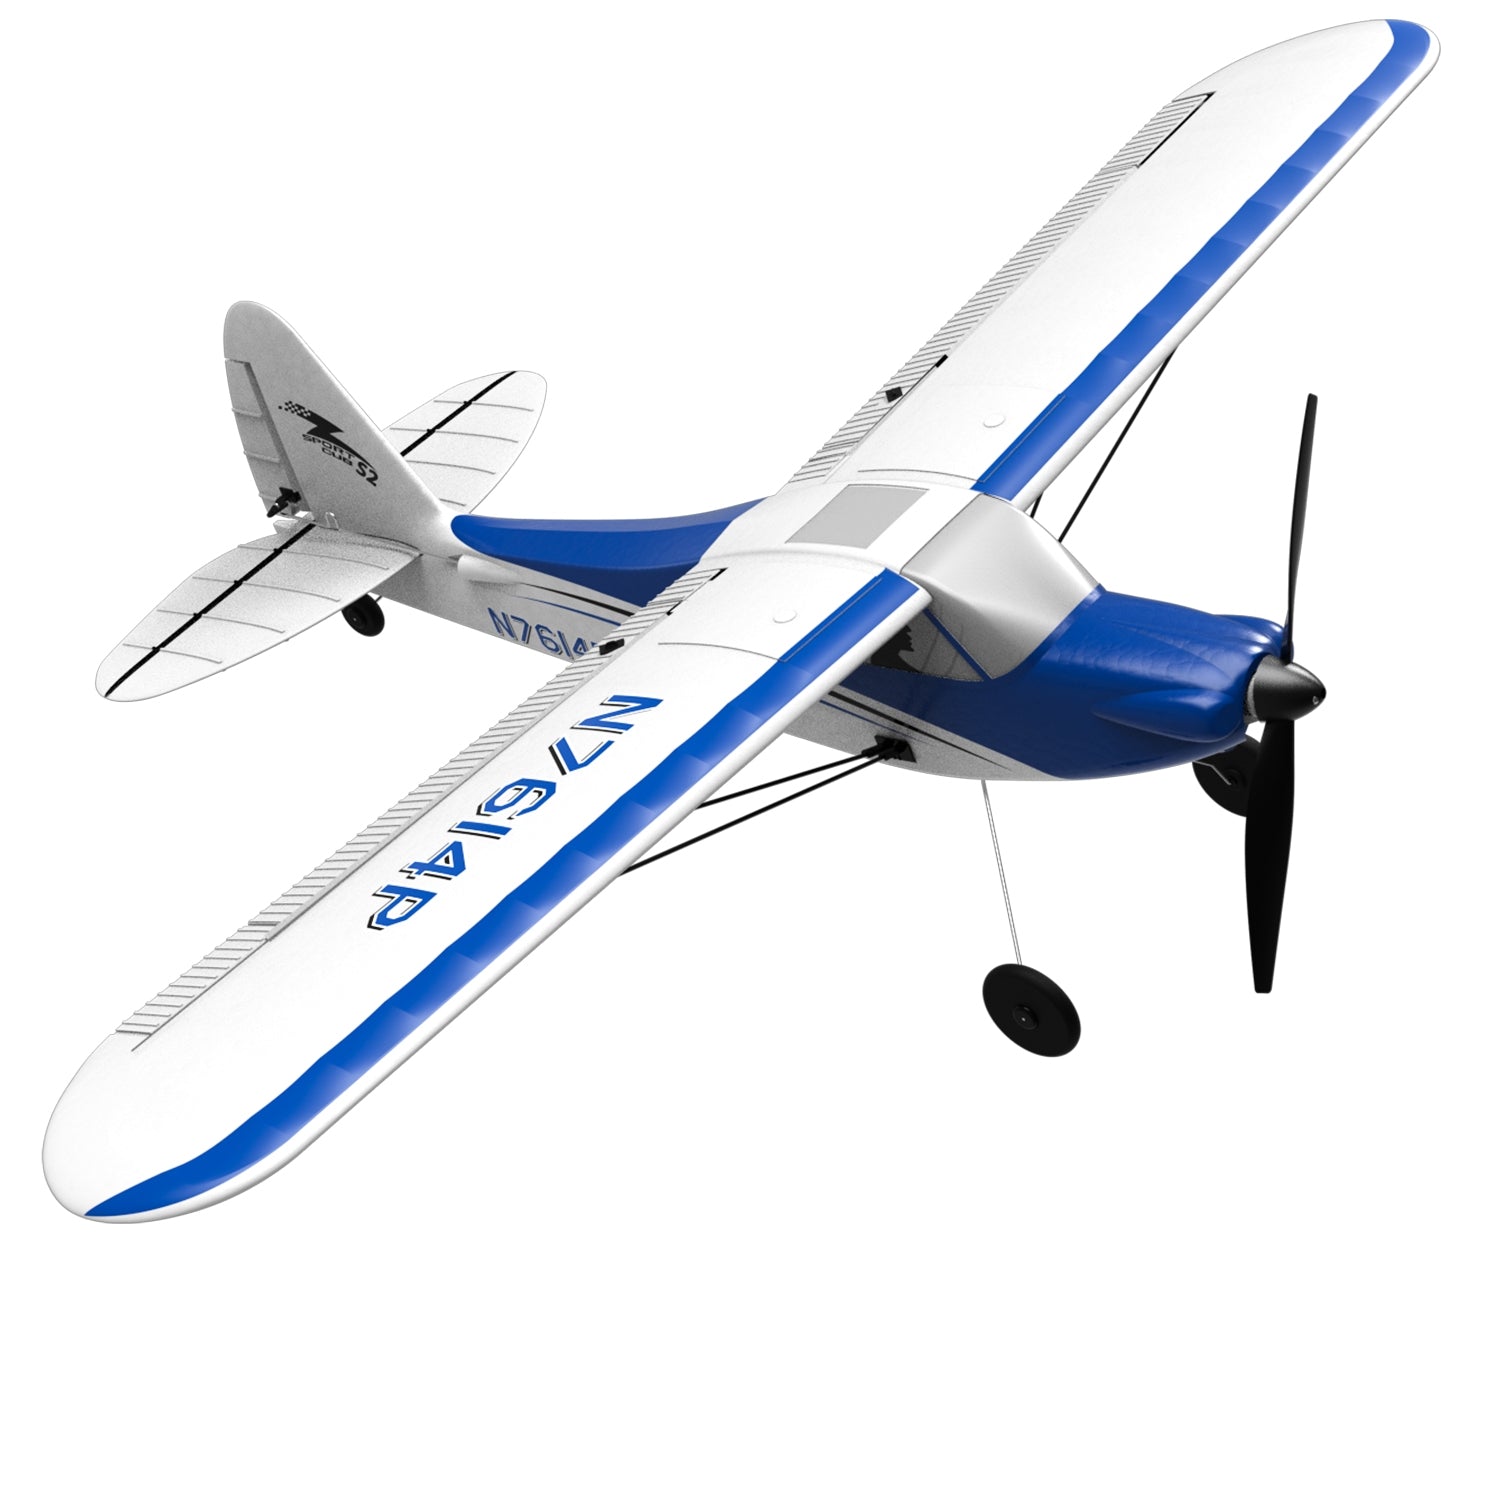 VOLANTEXRC Sport Cub 500 4Ch RC Trainer Airplane con 6-Axis Gyro One-key Aerobatic Park flyer (761-4) RTF Blue